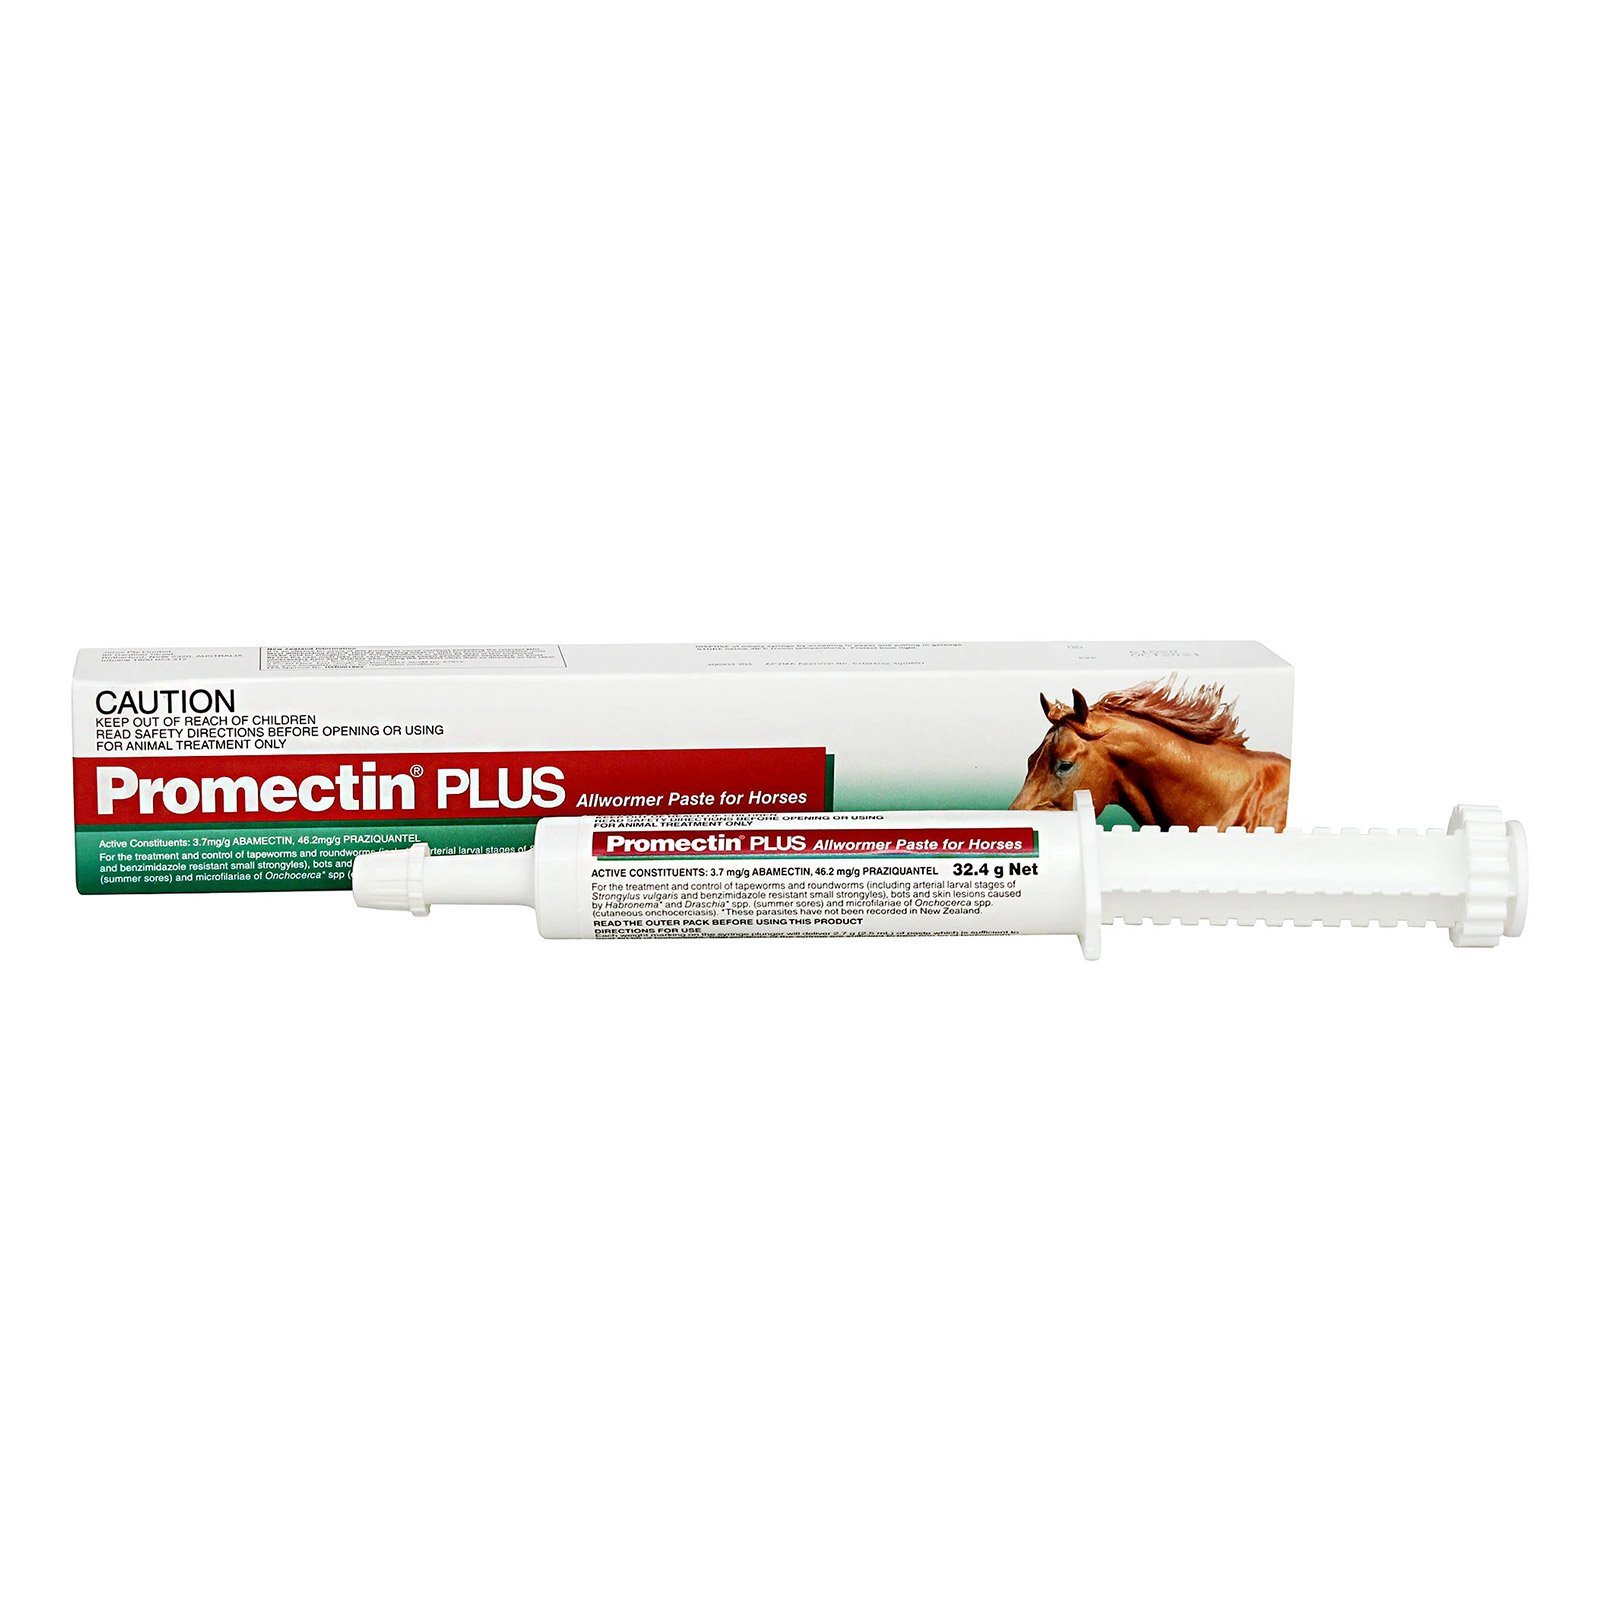 Promectin Plus Allwormer for Horses (32.4 gm)